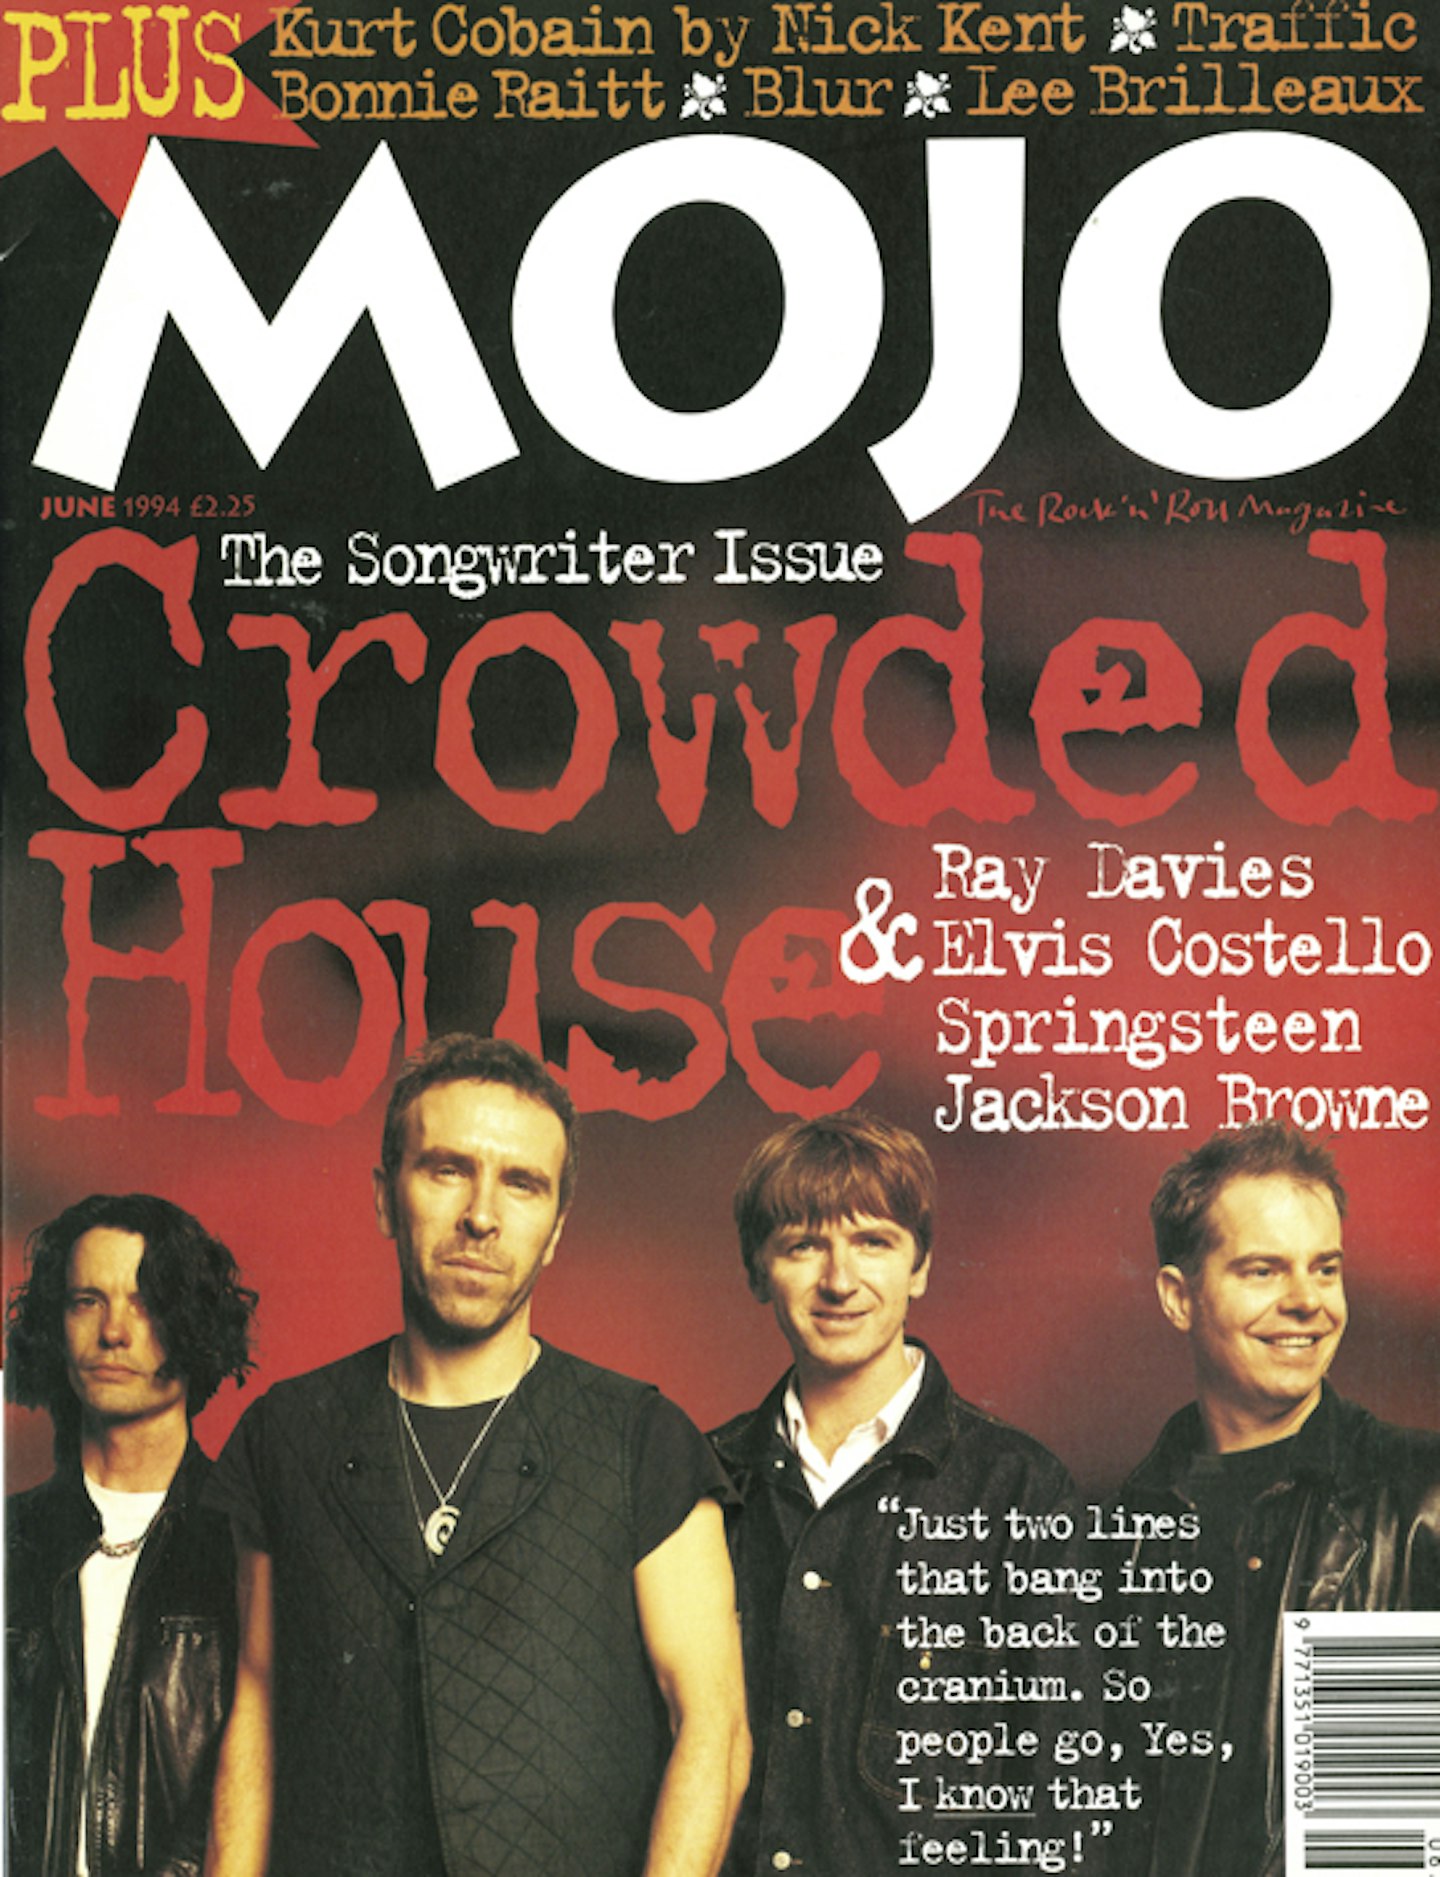 MOJO Issue 7 / June 1994